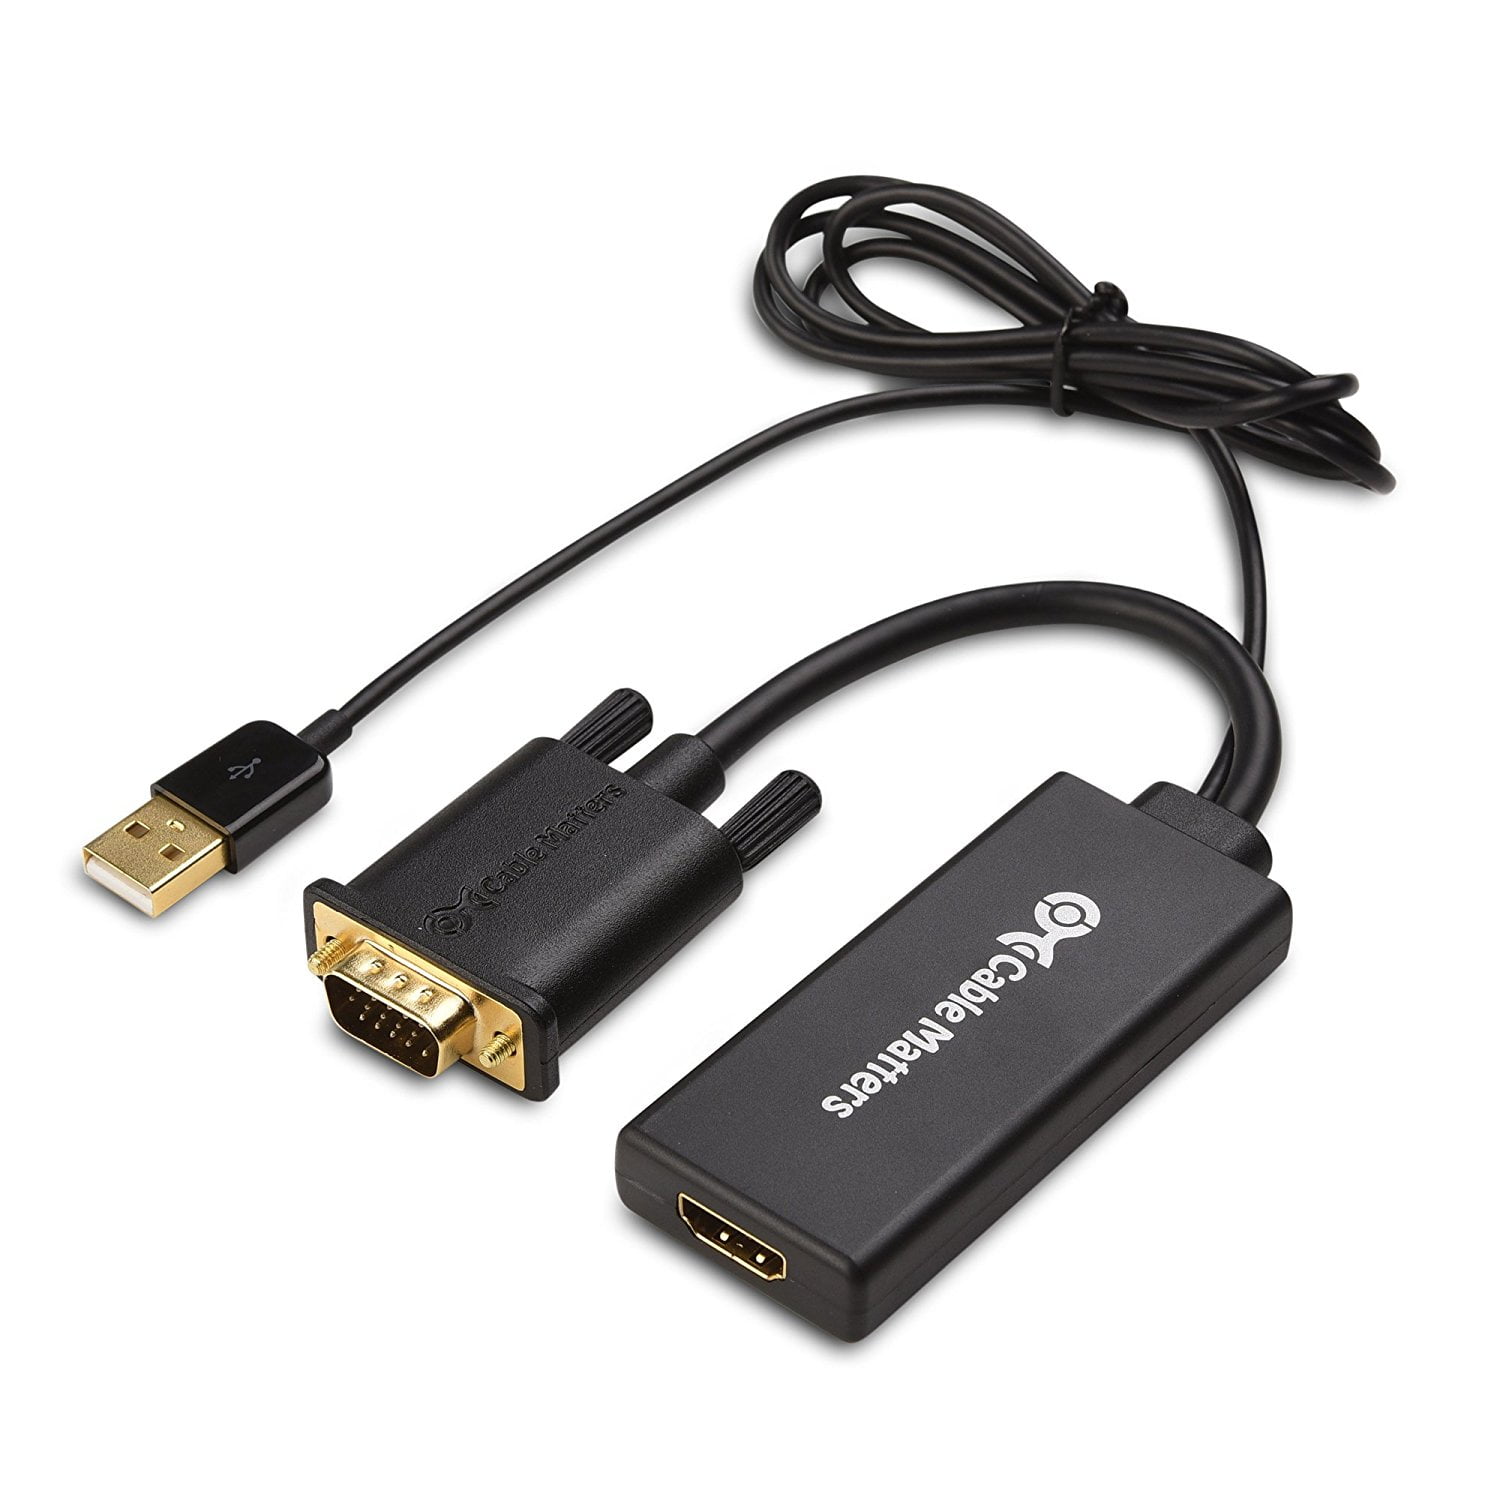 Intiem veronderstellen nikkel Cable Matters VGA to HDMI Converter (VGA to HDMI Adapter) with Audio  Support - Walmart.com